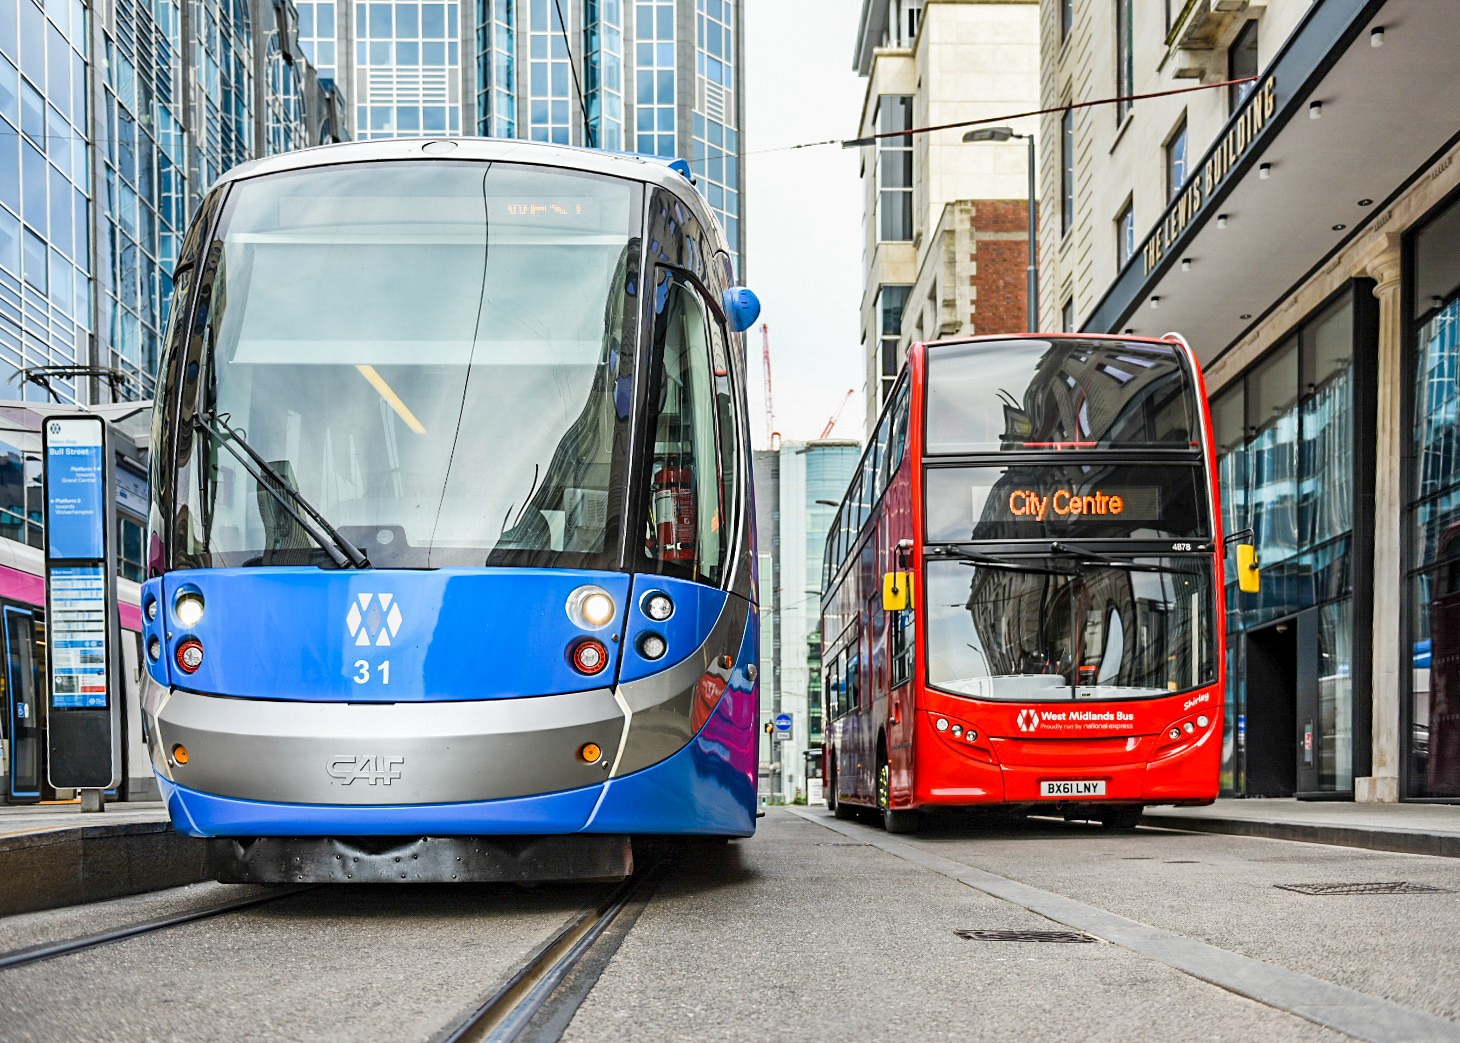 Full £1.3 billion transport investment programme confirmed